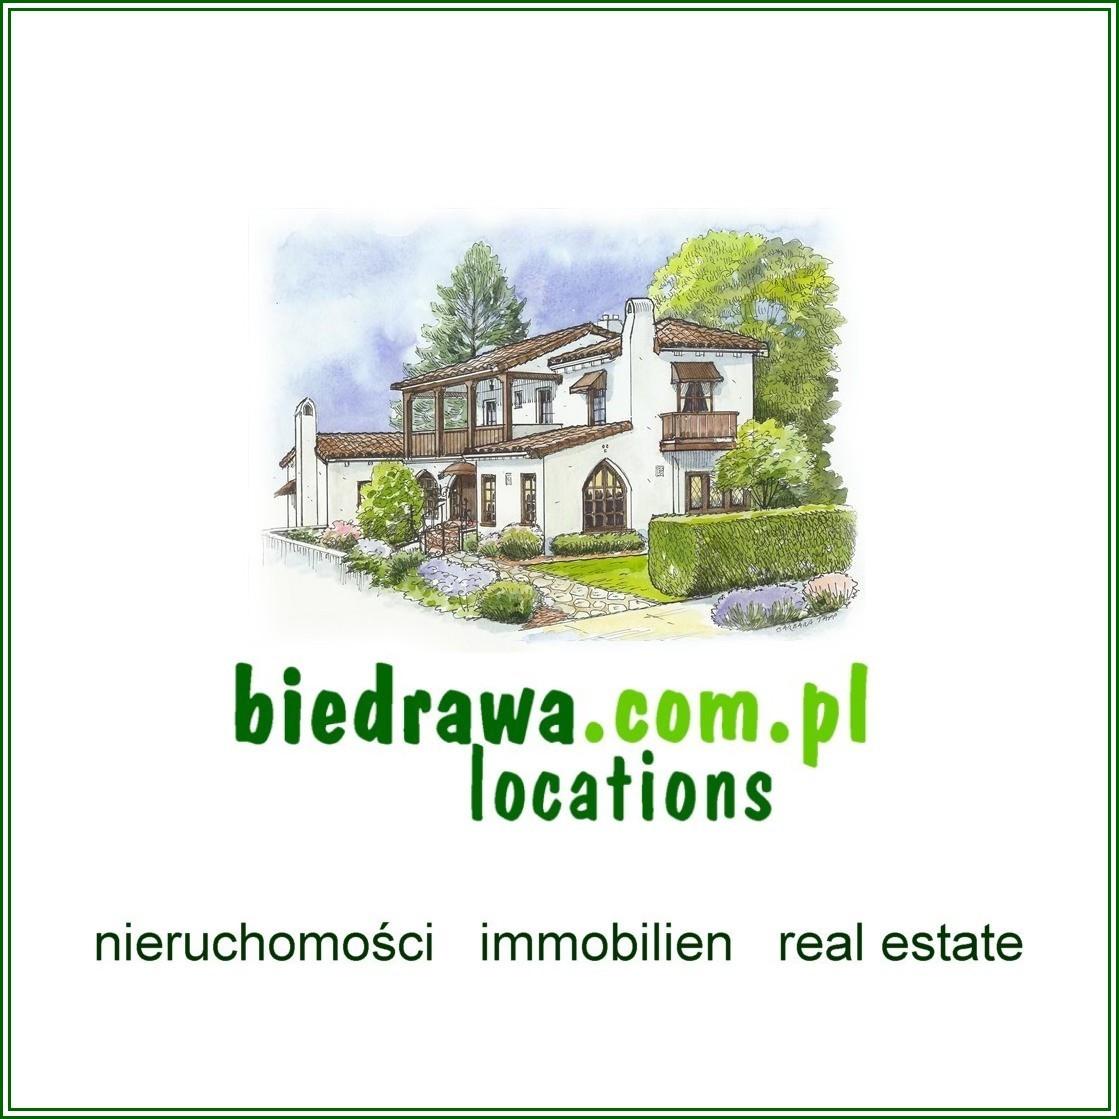 biedrawa.com.pl locations